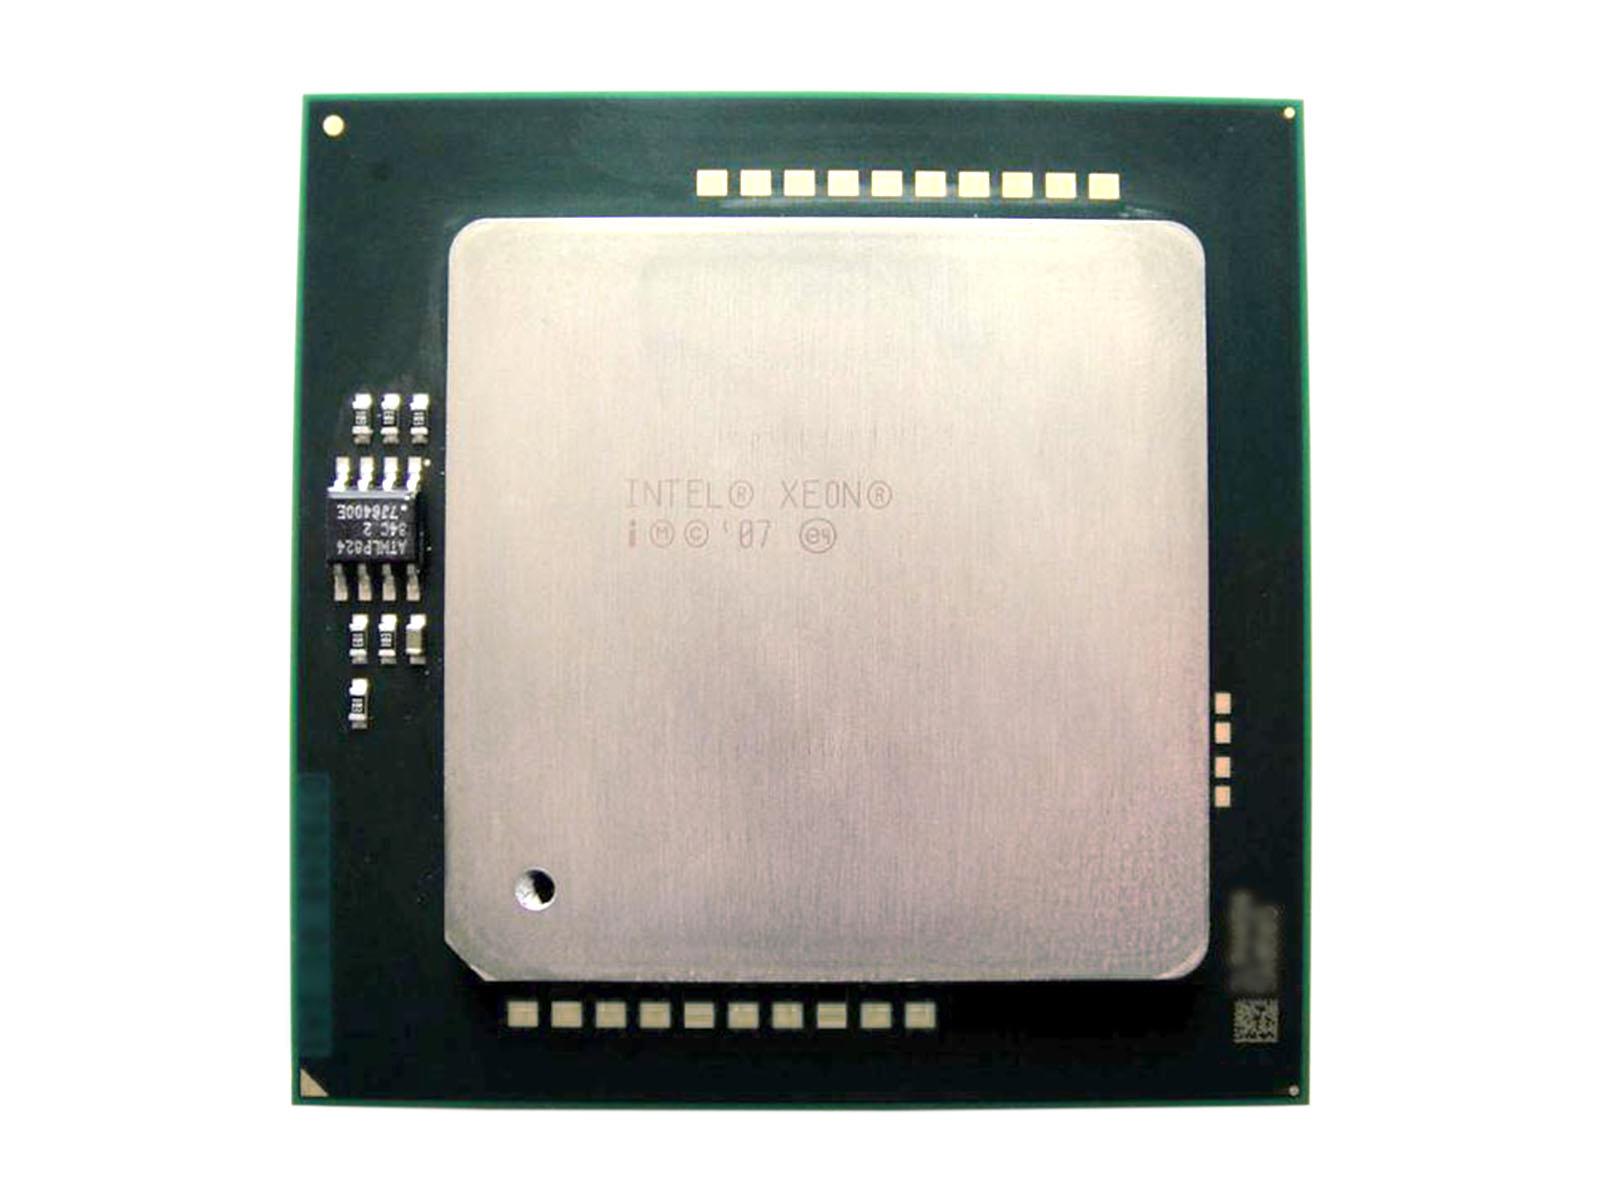 Intel Xeon 604 3.0GHz CPU